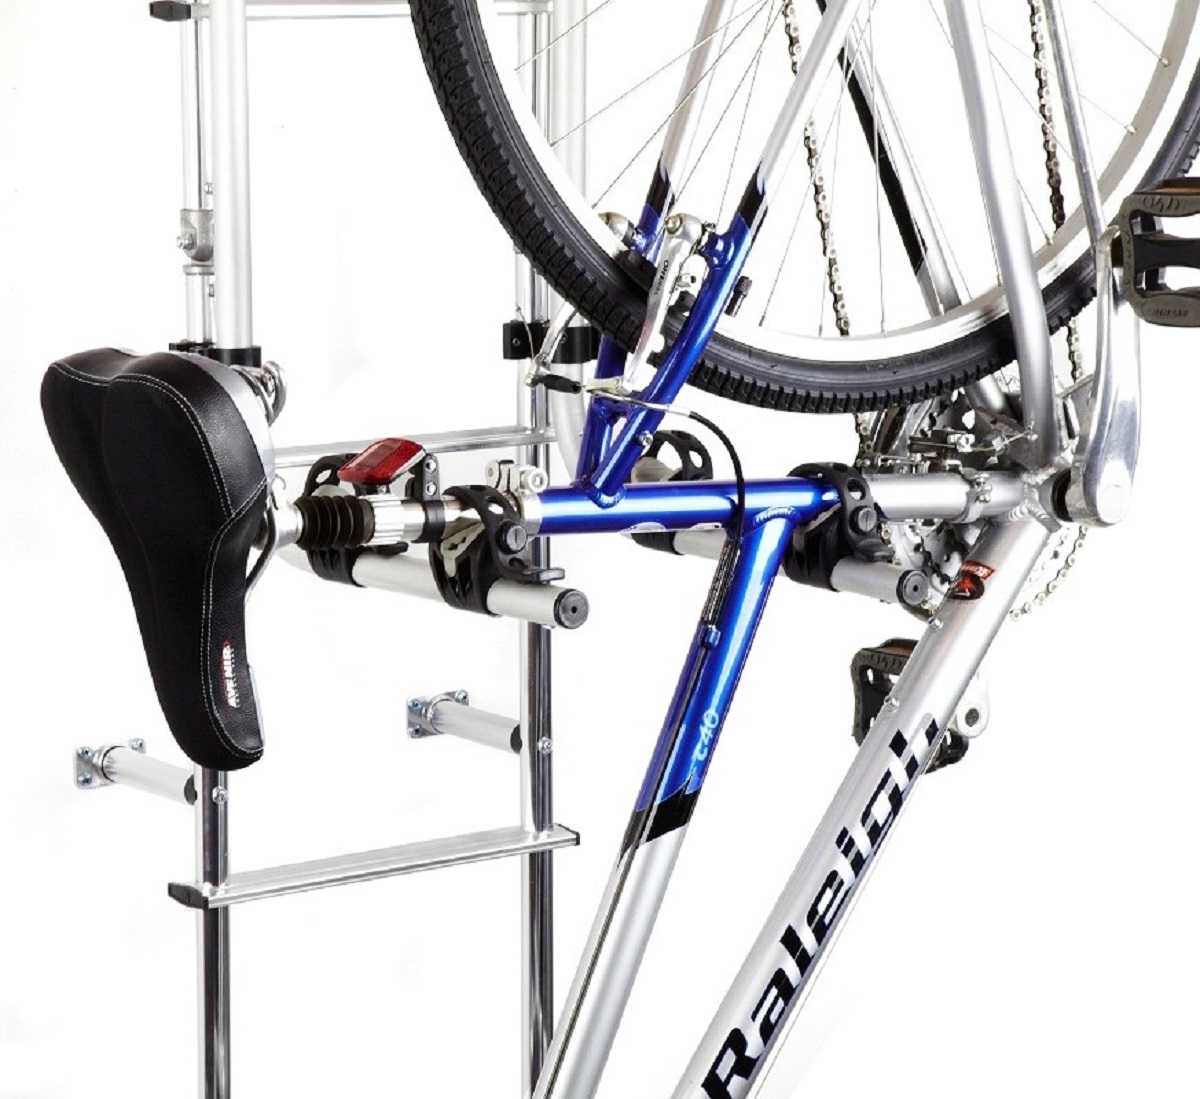 rv ladder bike rack